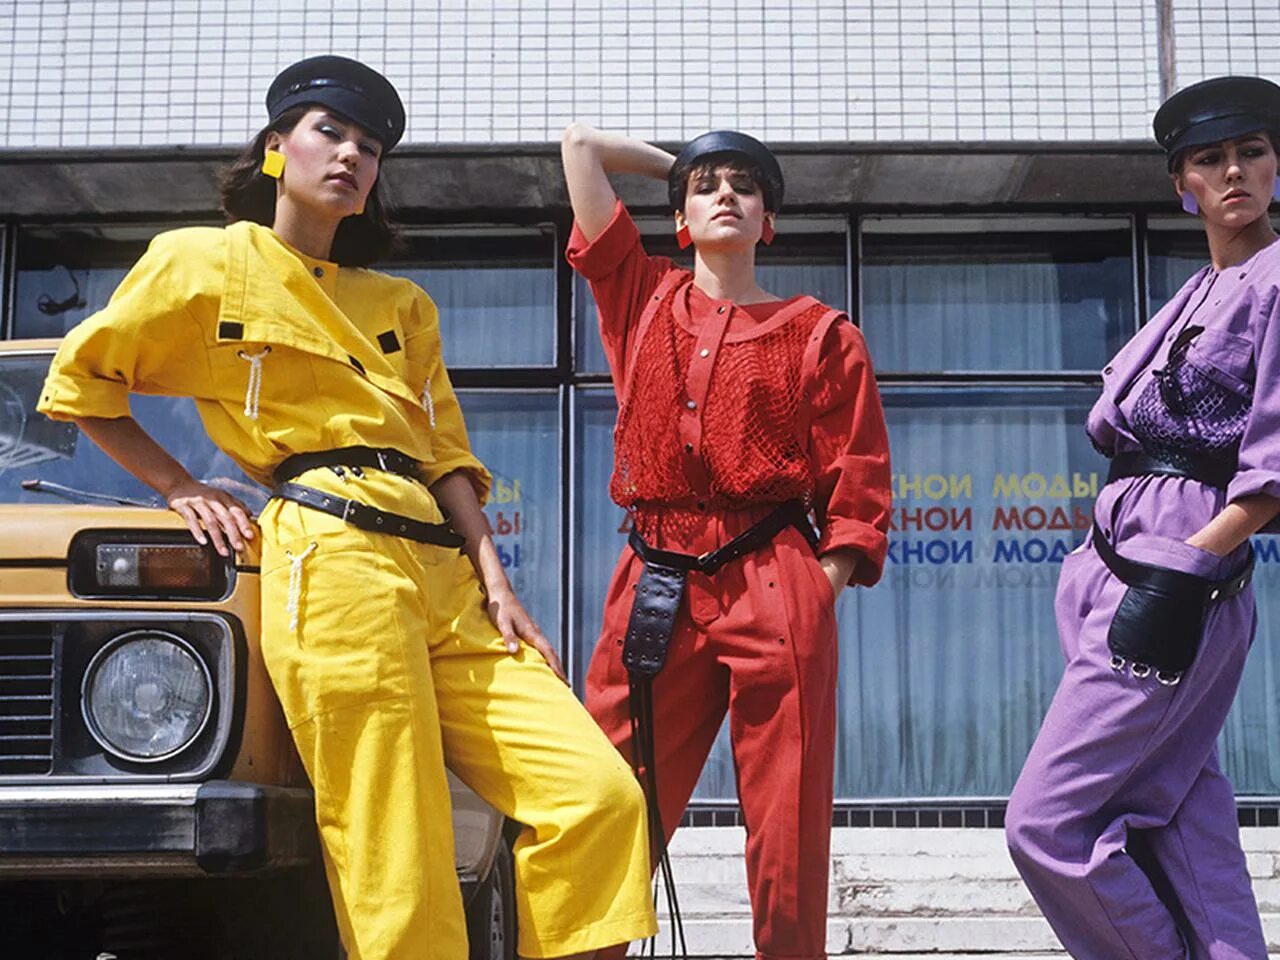 Направление в японской моде 1990. 80-Е Америка мода. Япония 80е стиль. Мода 80-х. Стиль 90х одежда.